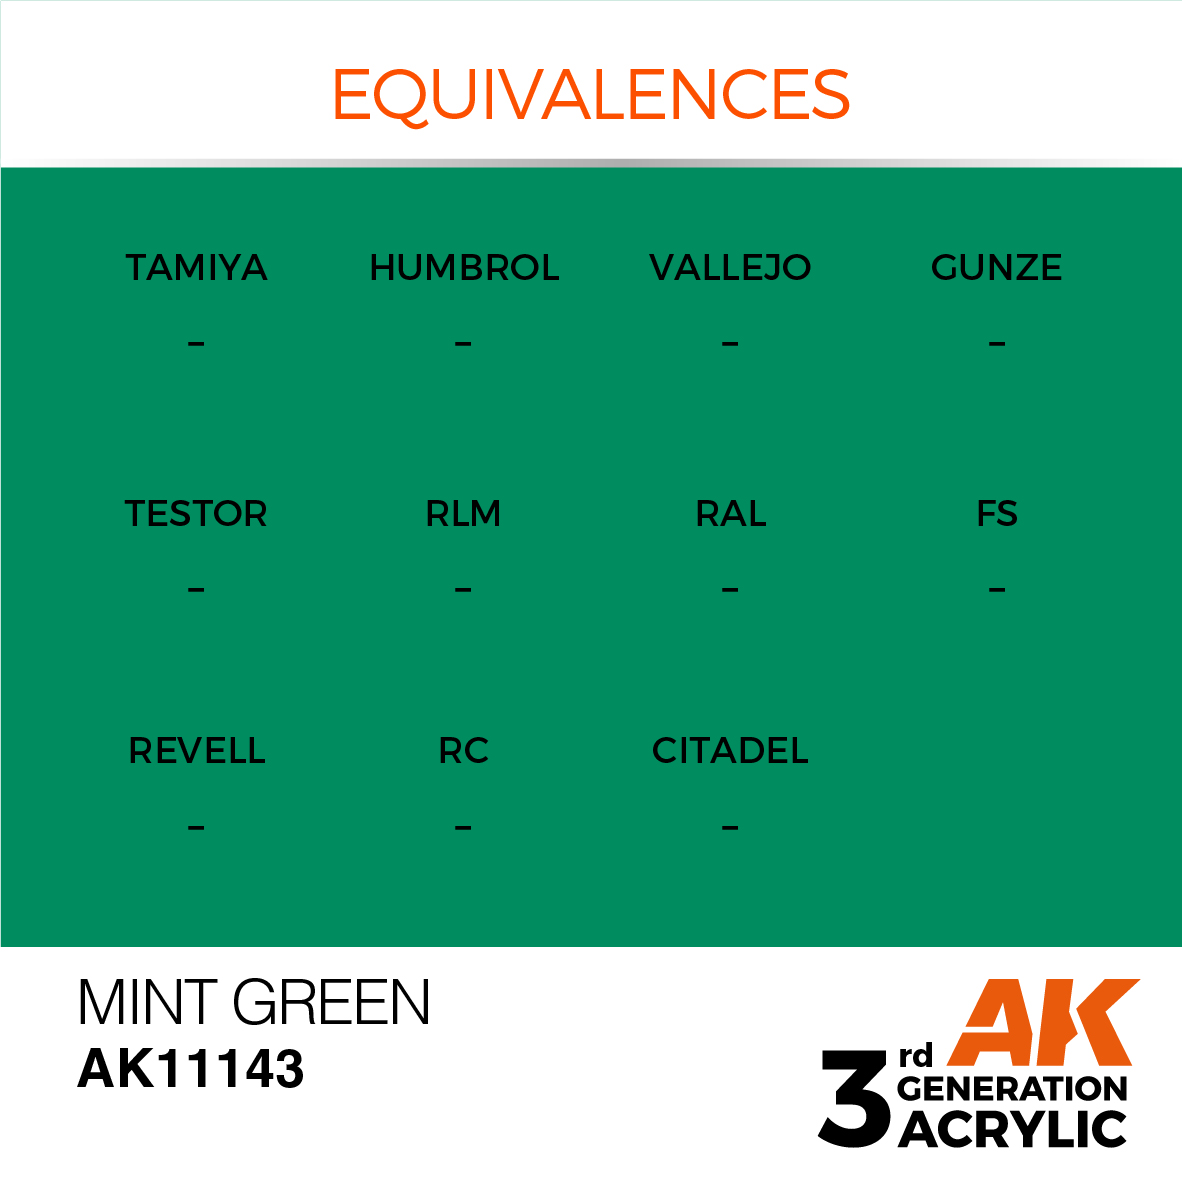 AK11143 Mint Green (3rd-Generation) (17mL)